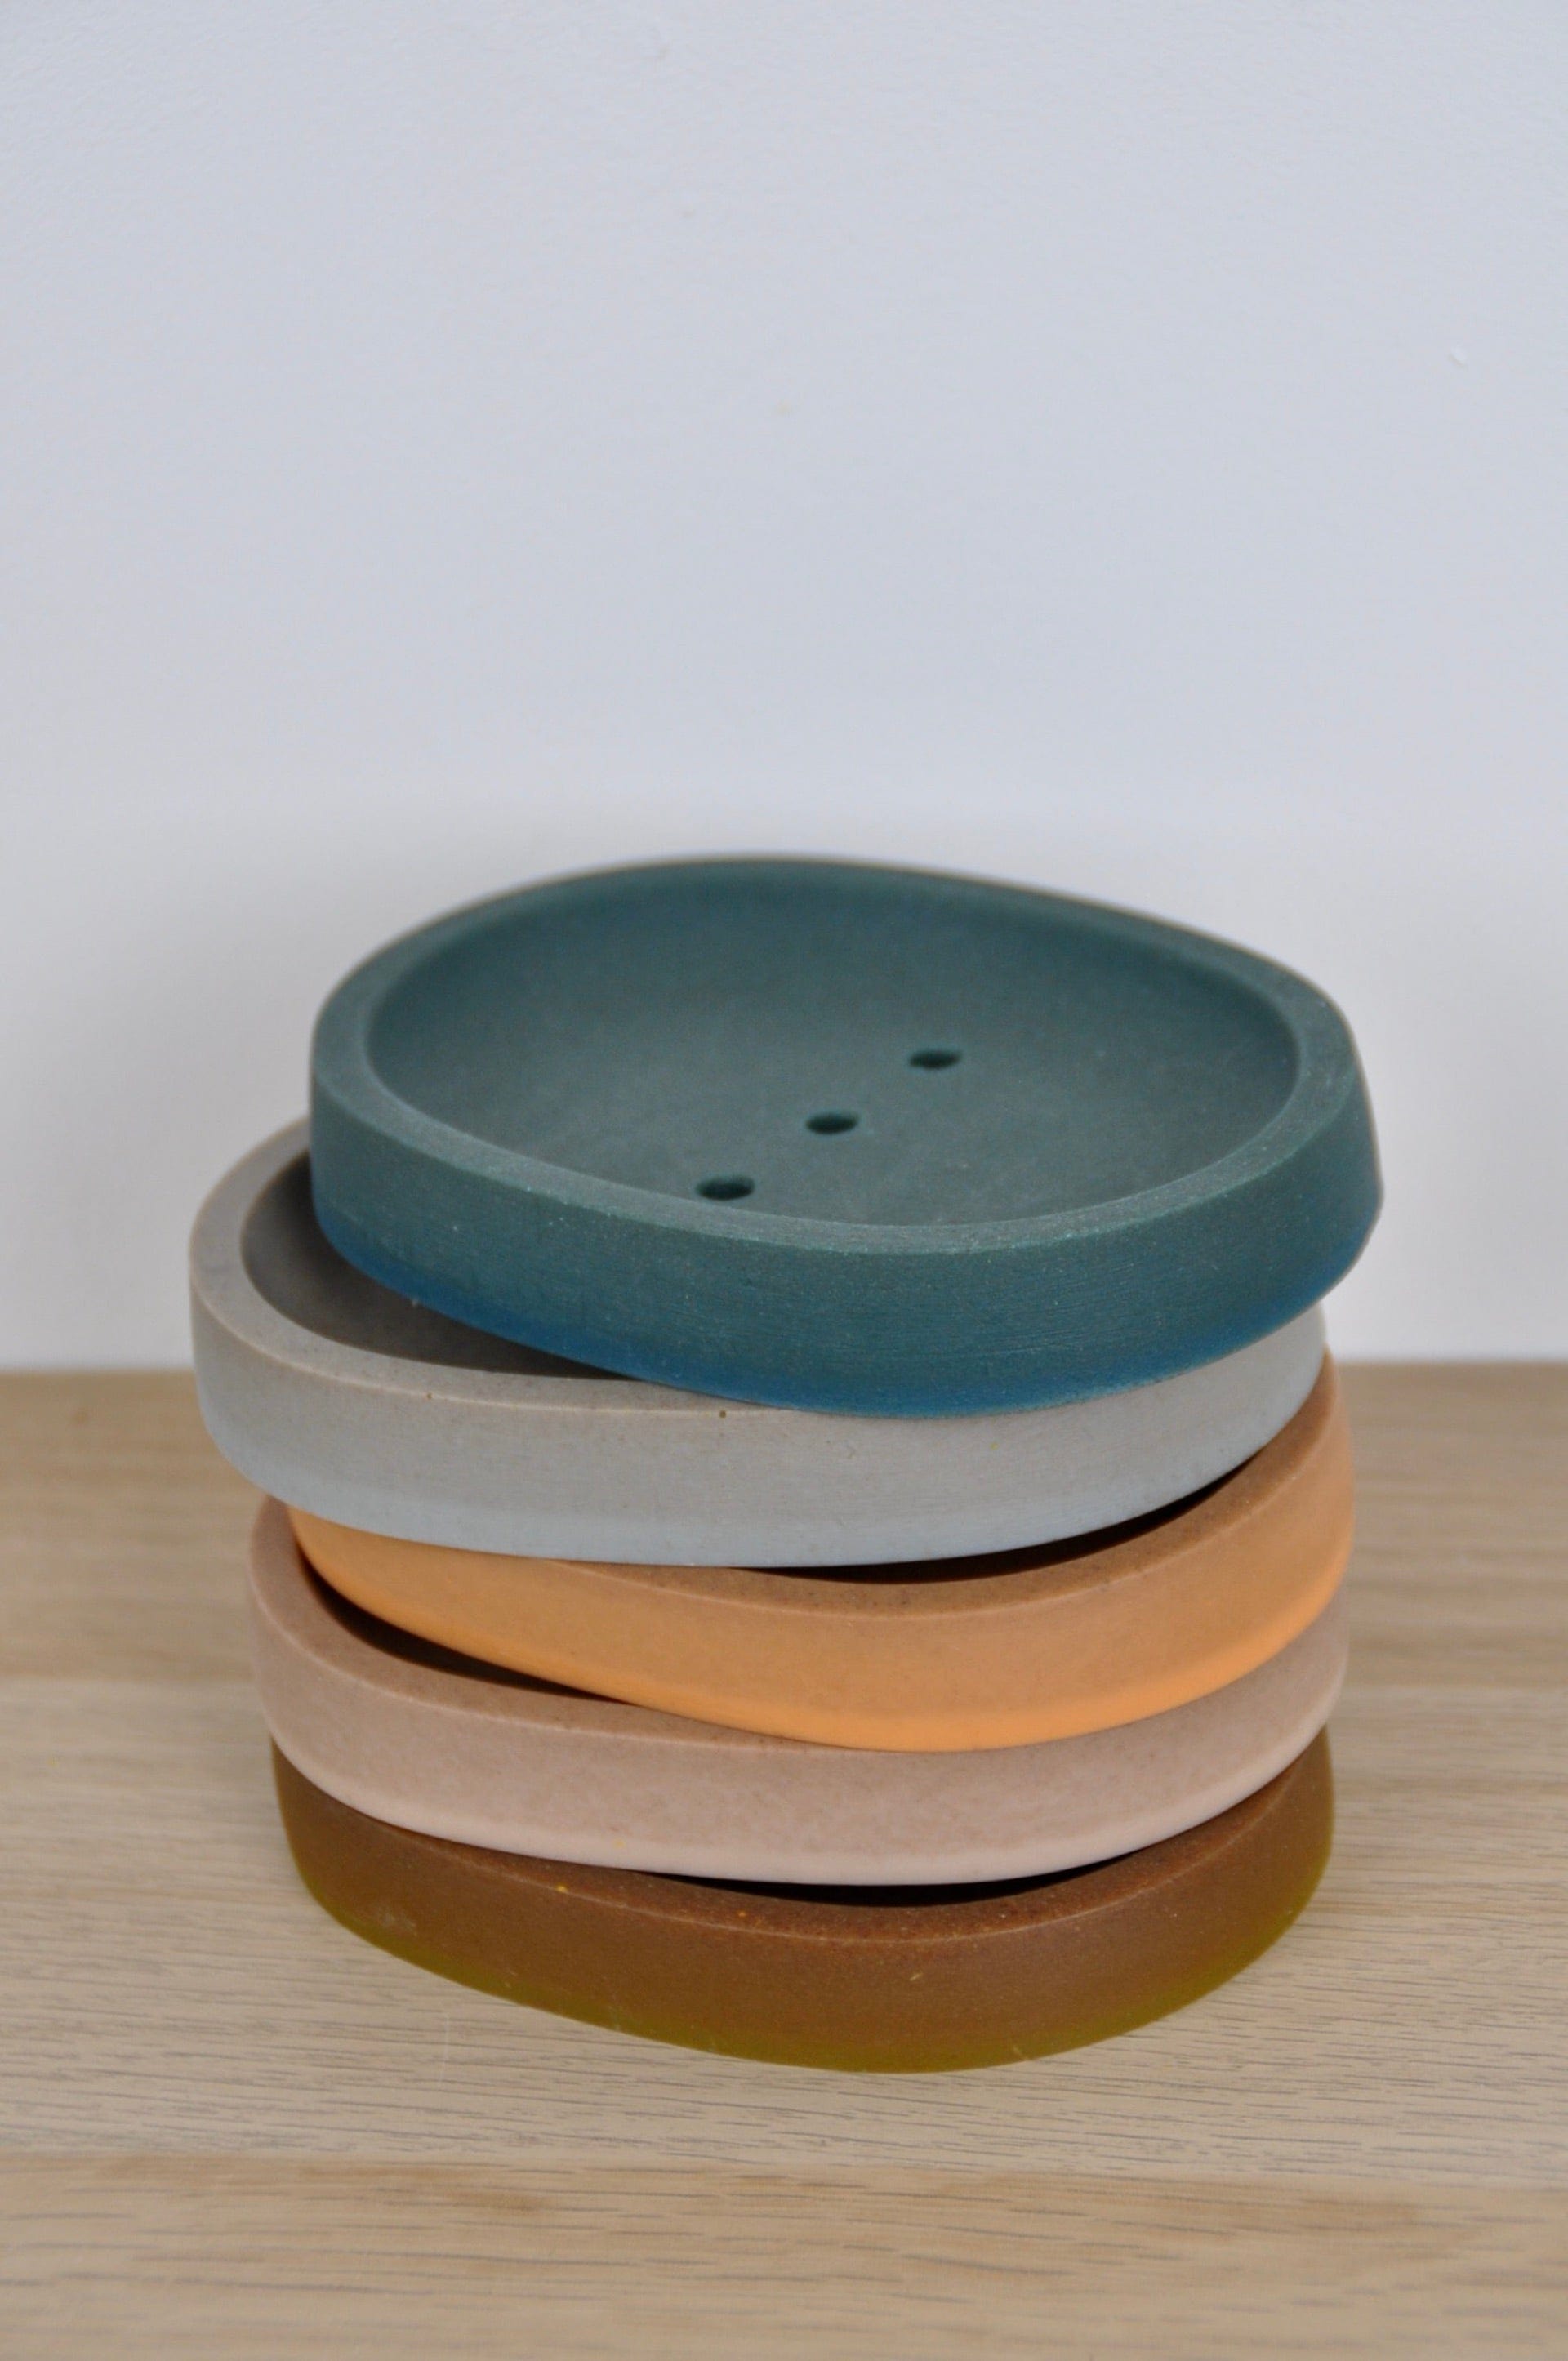 PRIOR SHOP Vase Dust & Plant Resin Soap Dish  - Oval (various colours)